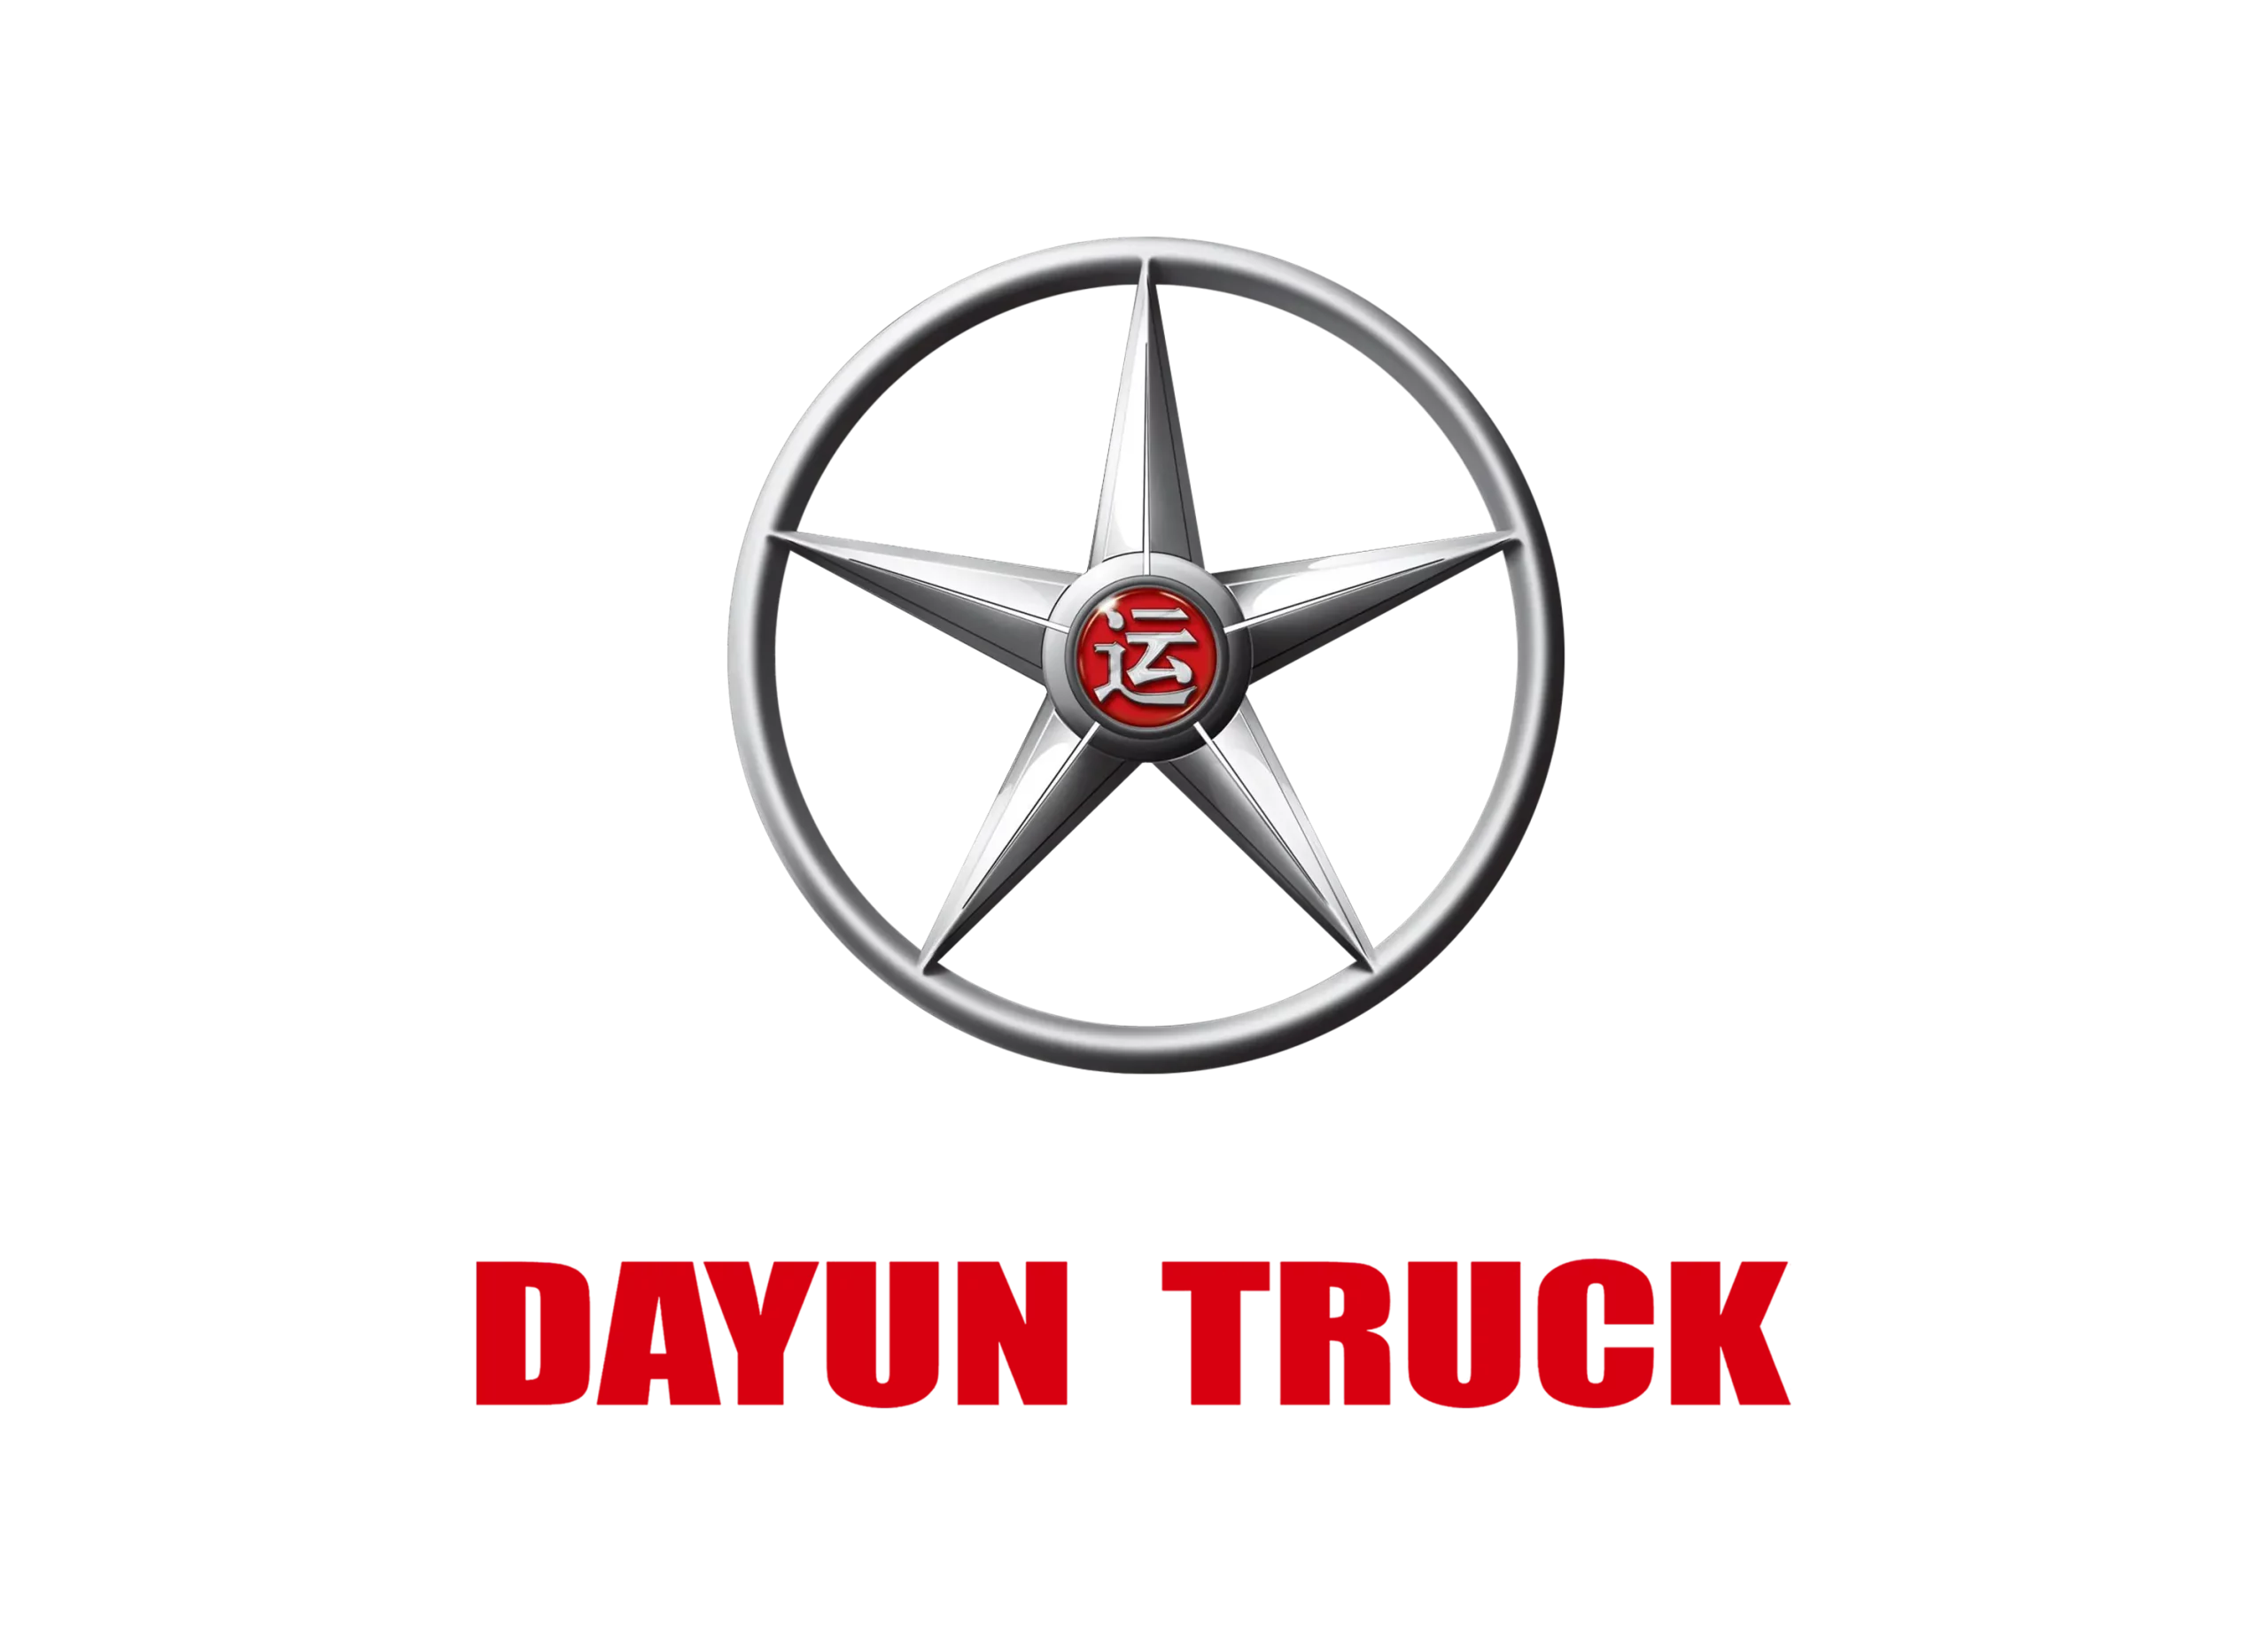 Dayun logo present